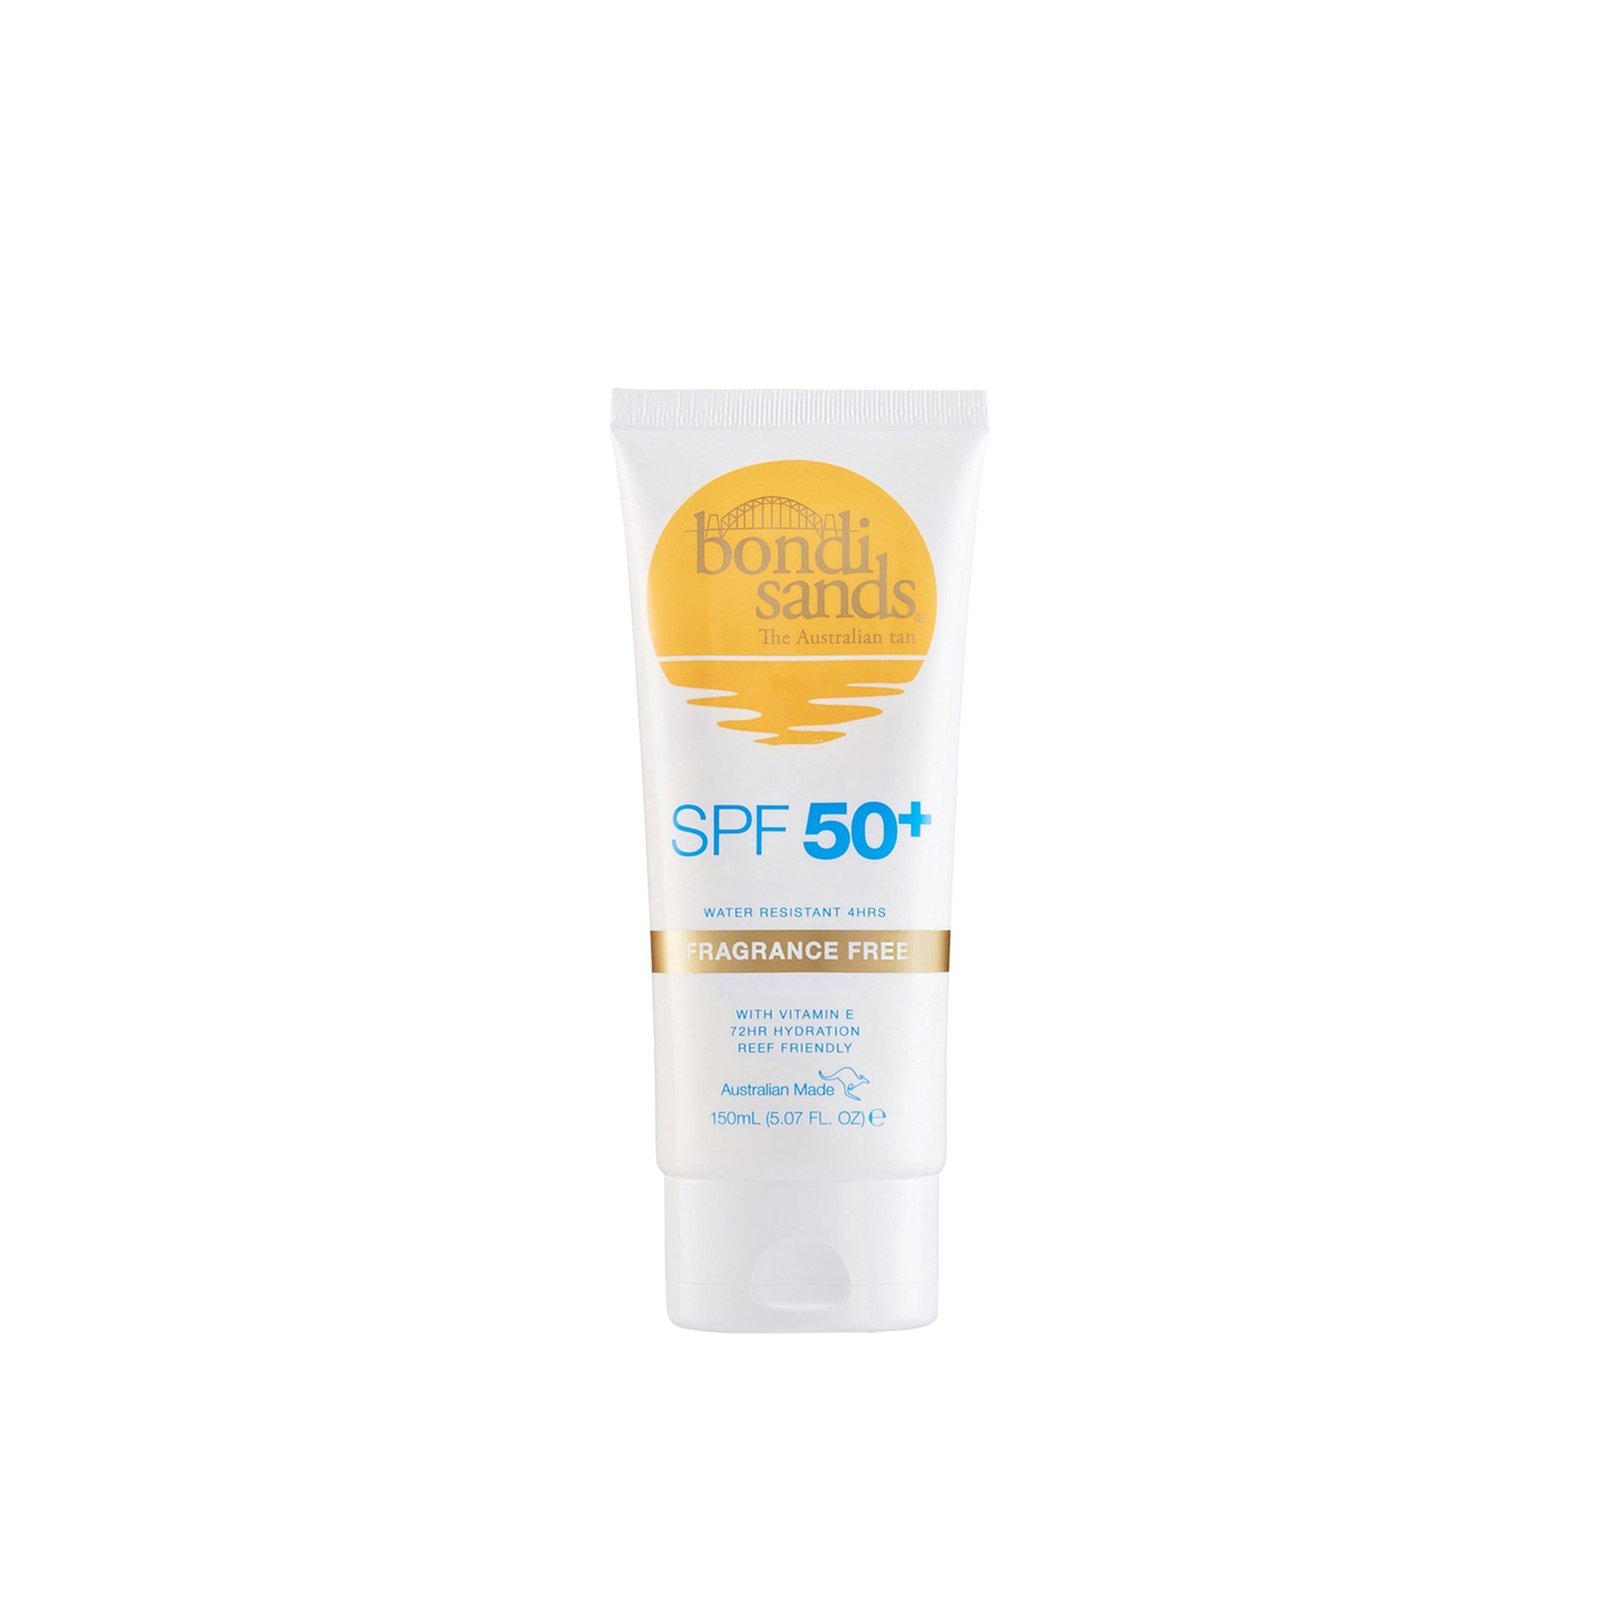 Bondi Sands Fragrance Free Sunscreen Lotion SPF50+ 150ml (5.07 fl oz)